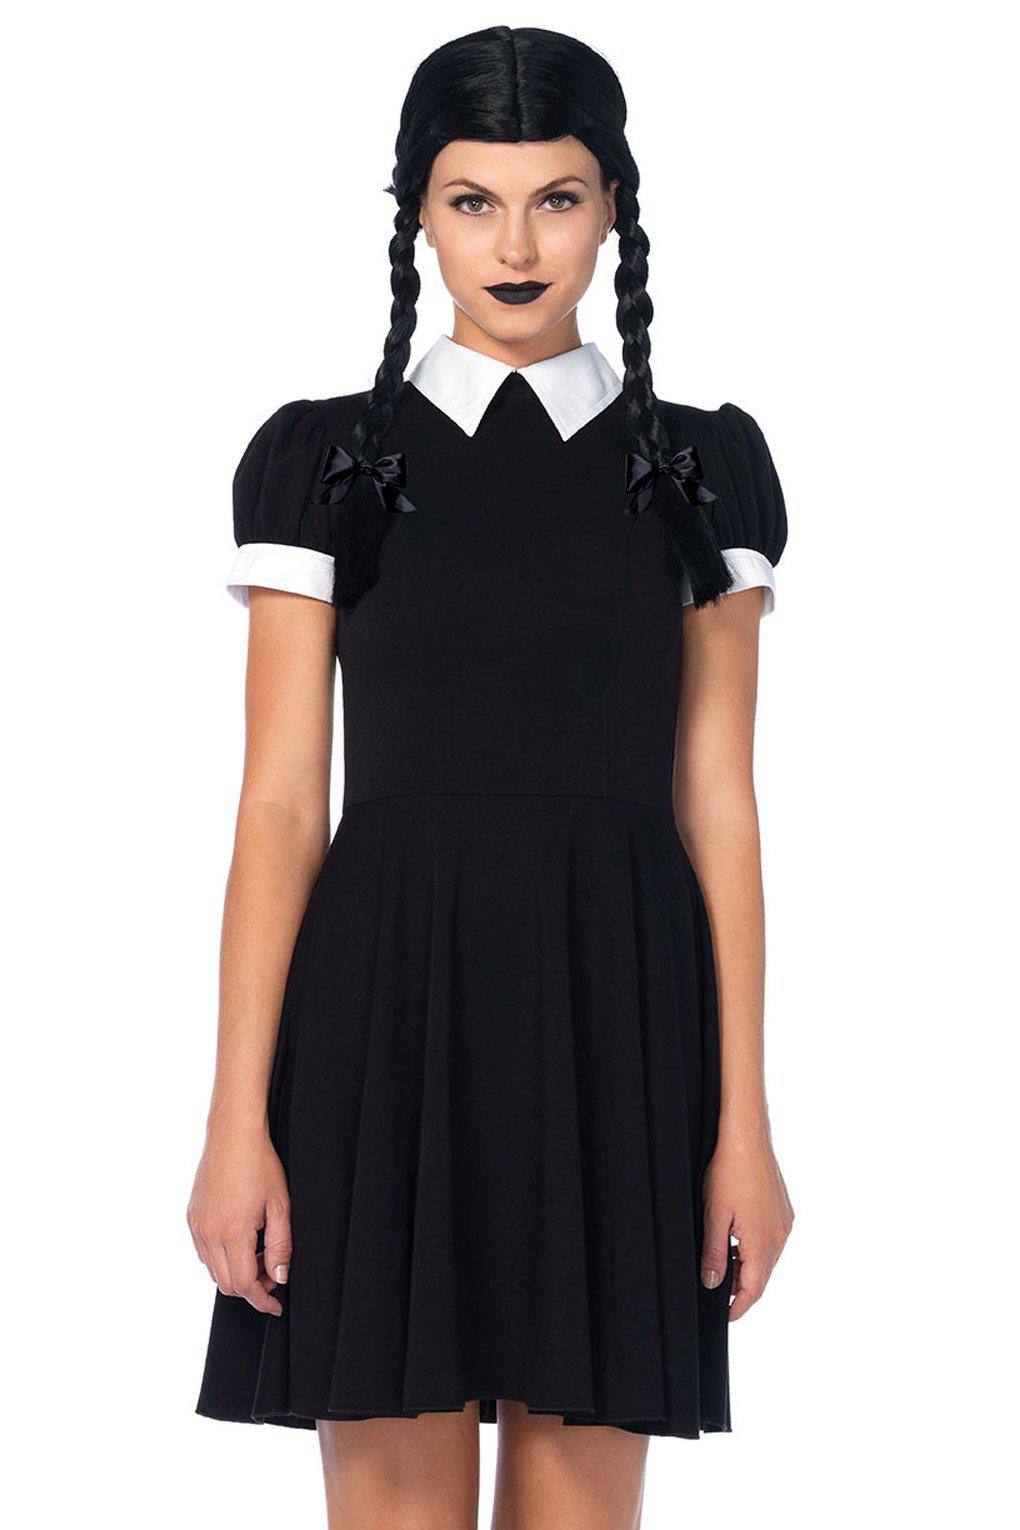 Gothic Darling Costume-Villian Costumes-Leg Avenue-Black-S/M-SEXYSHOES.COM